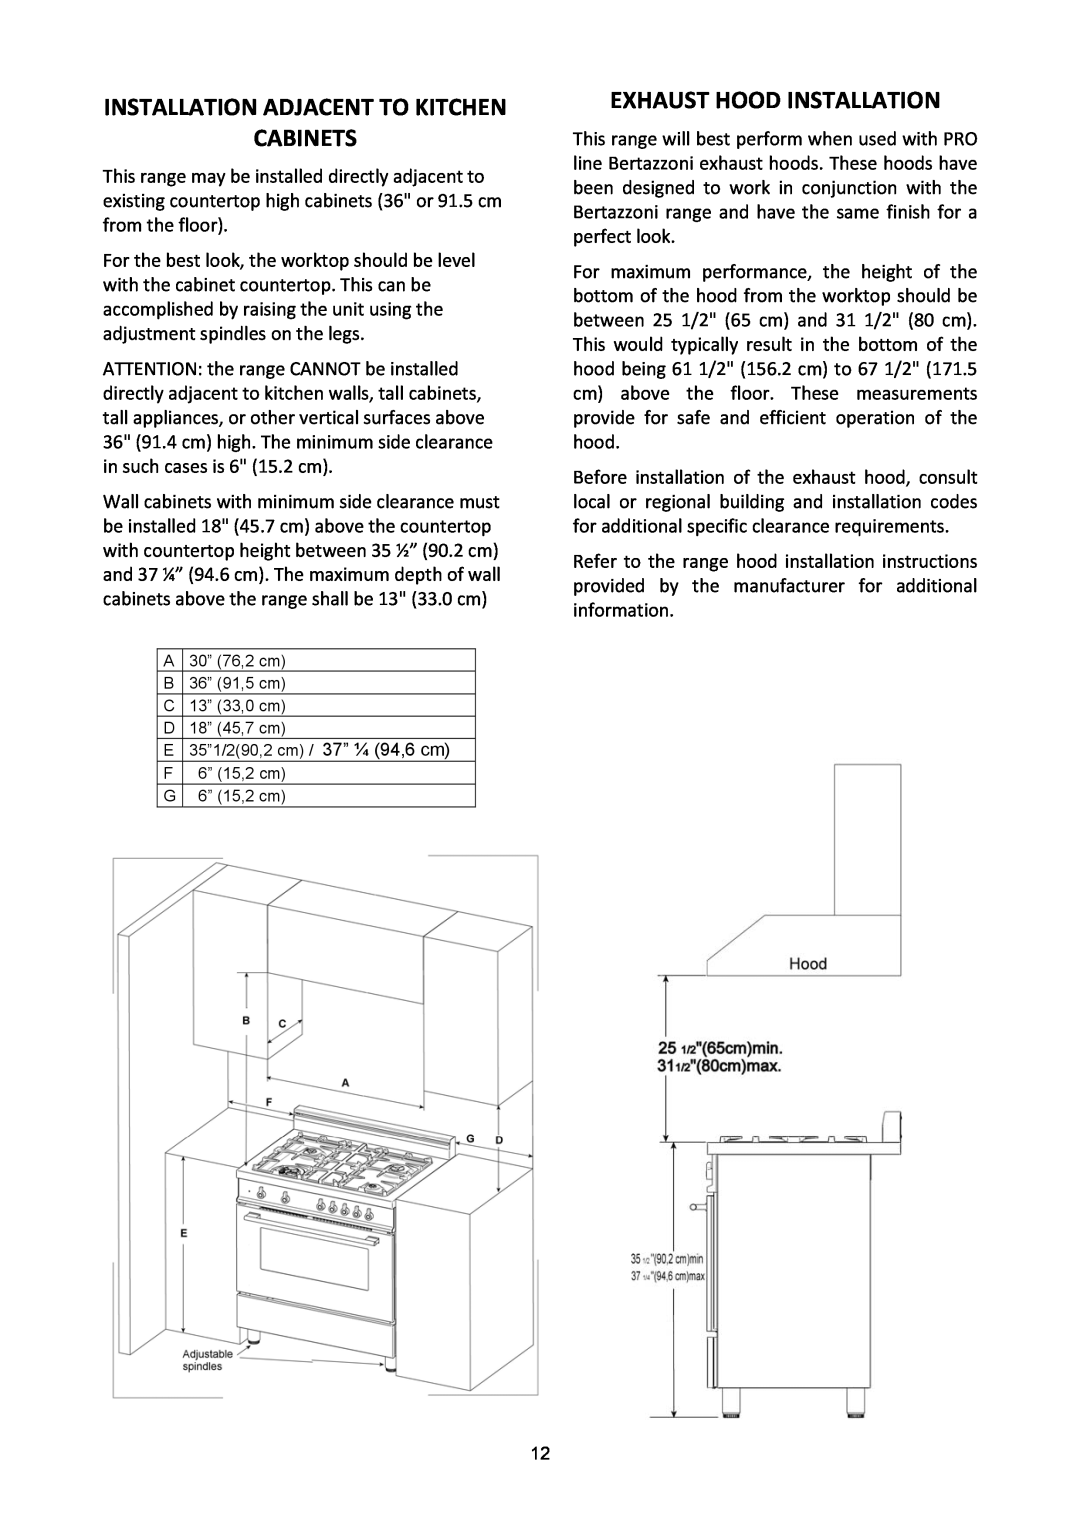 Bertazzoni A304GGVXE/02, A304GGVXT/002 manual Installation Adjacent To Kitchen Cabinets, Exhaust Hood Installation 